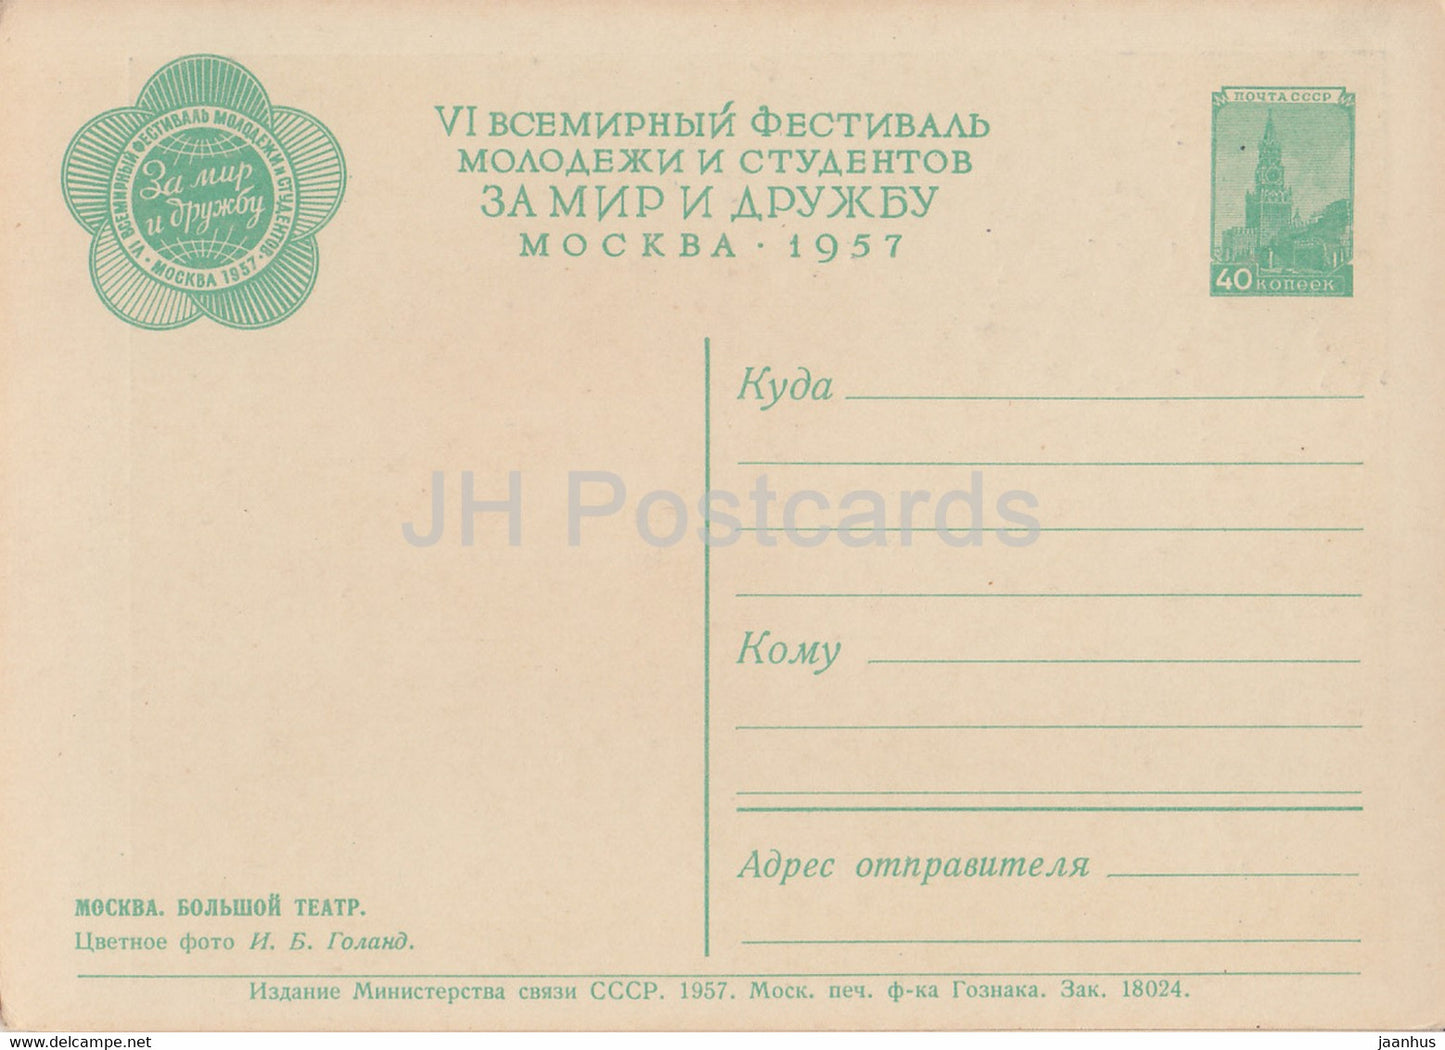 Moscow - Bolshoi Theatre - postal stationery - 1957 - Russia USSR - unused